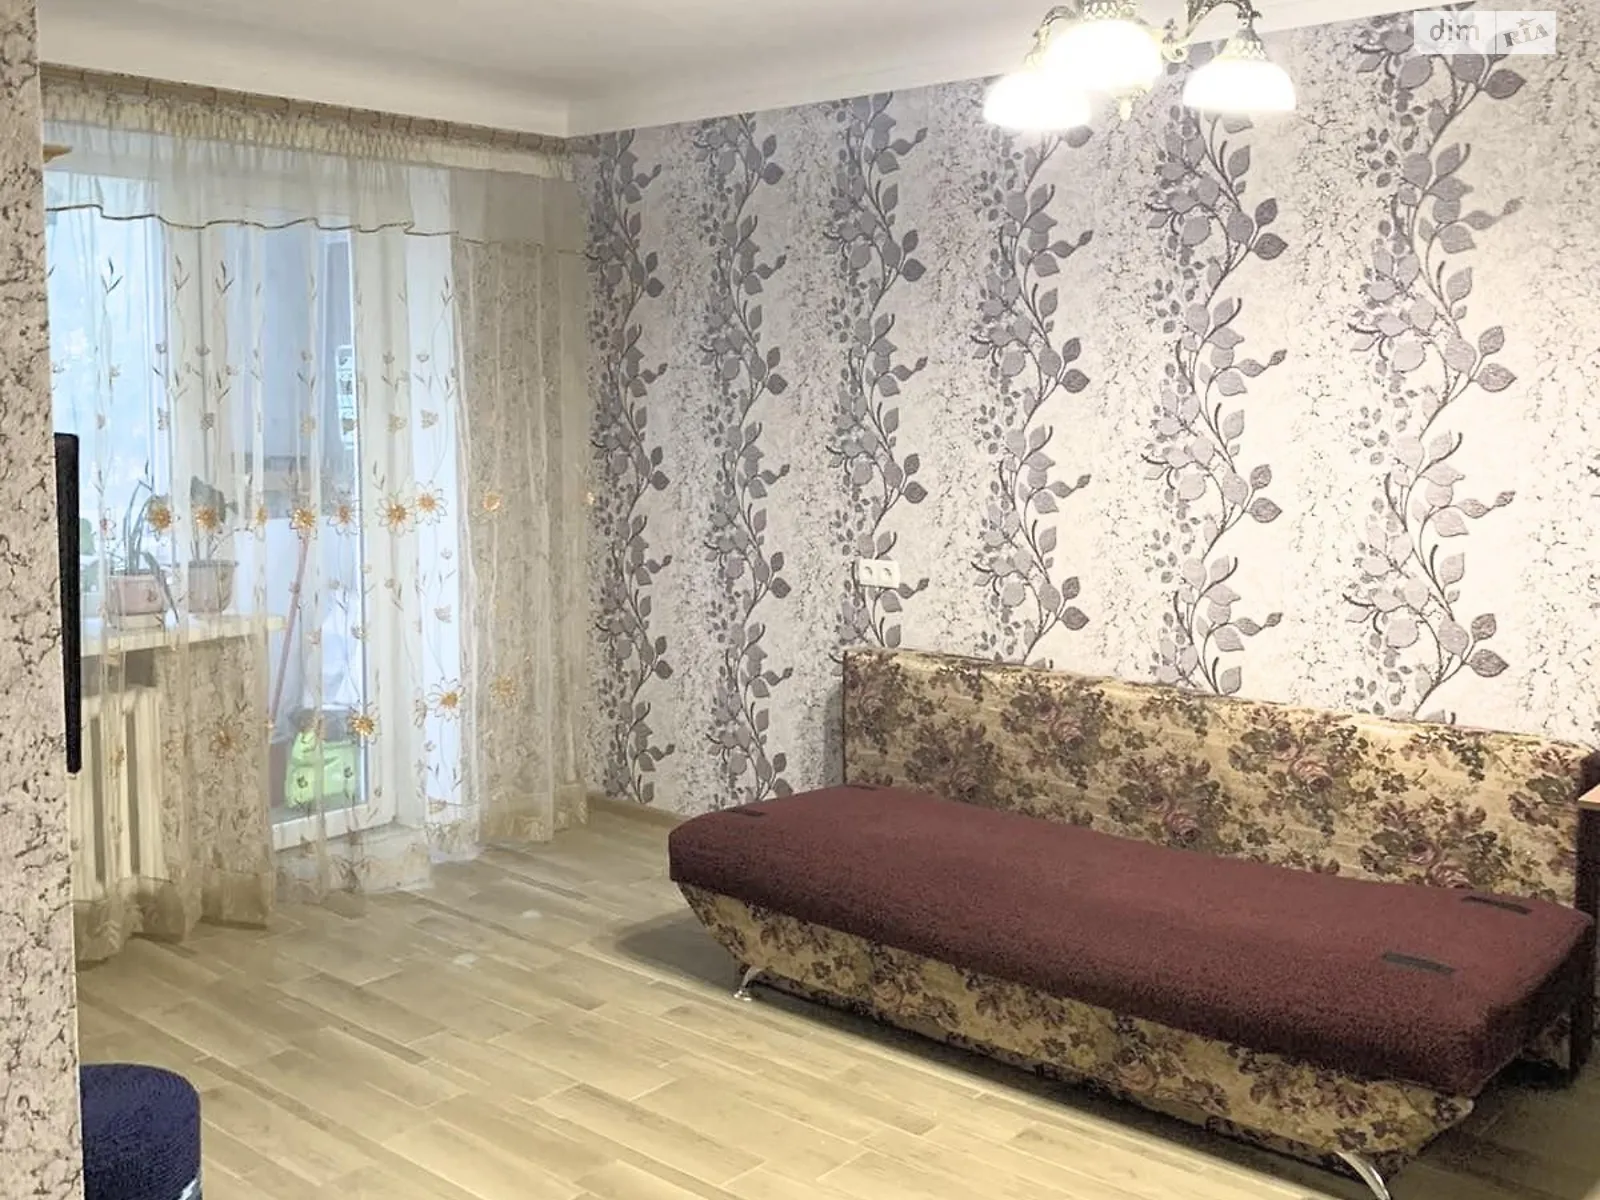 1-кімнатна квартира у Запоріжжі, цена: 850 грн